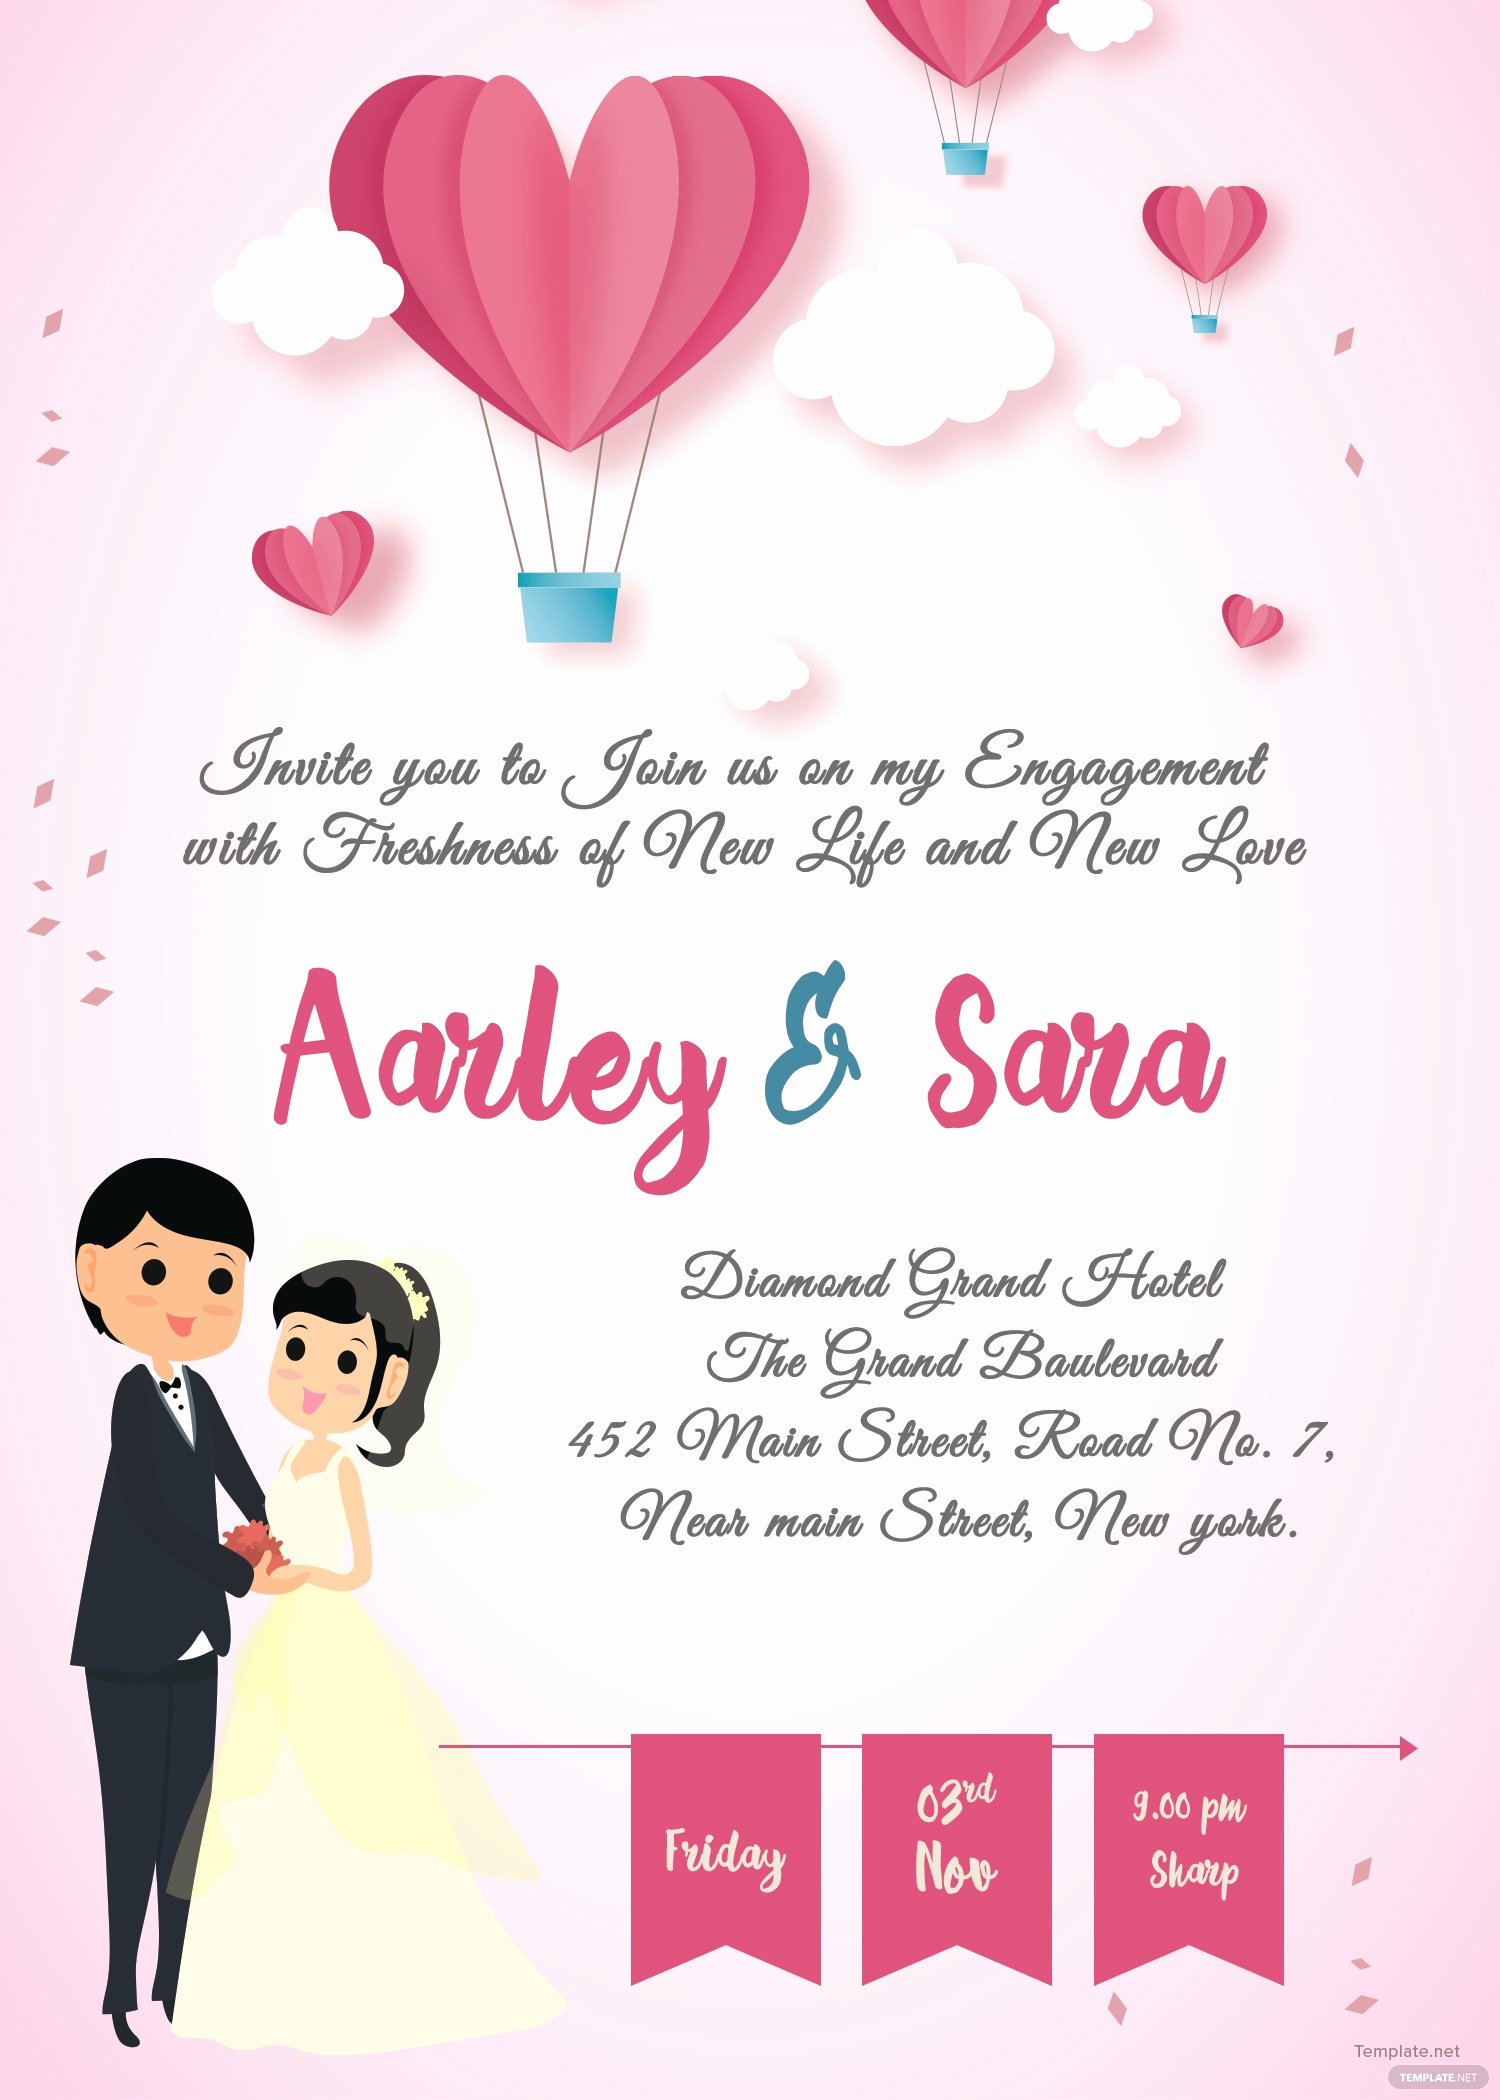 Wedding Invitation Template Illustrator Inspirational Free Elegant Engagement Invitation Card Template In Adobe